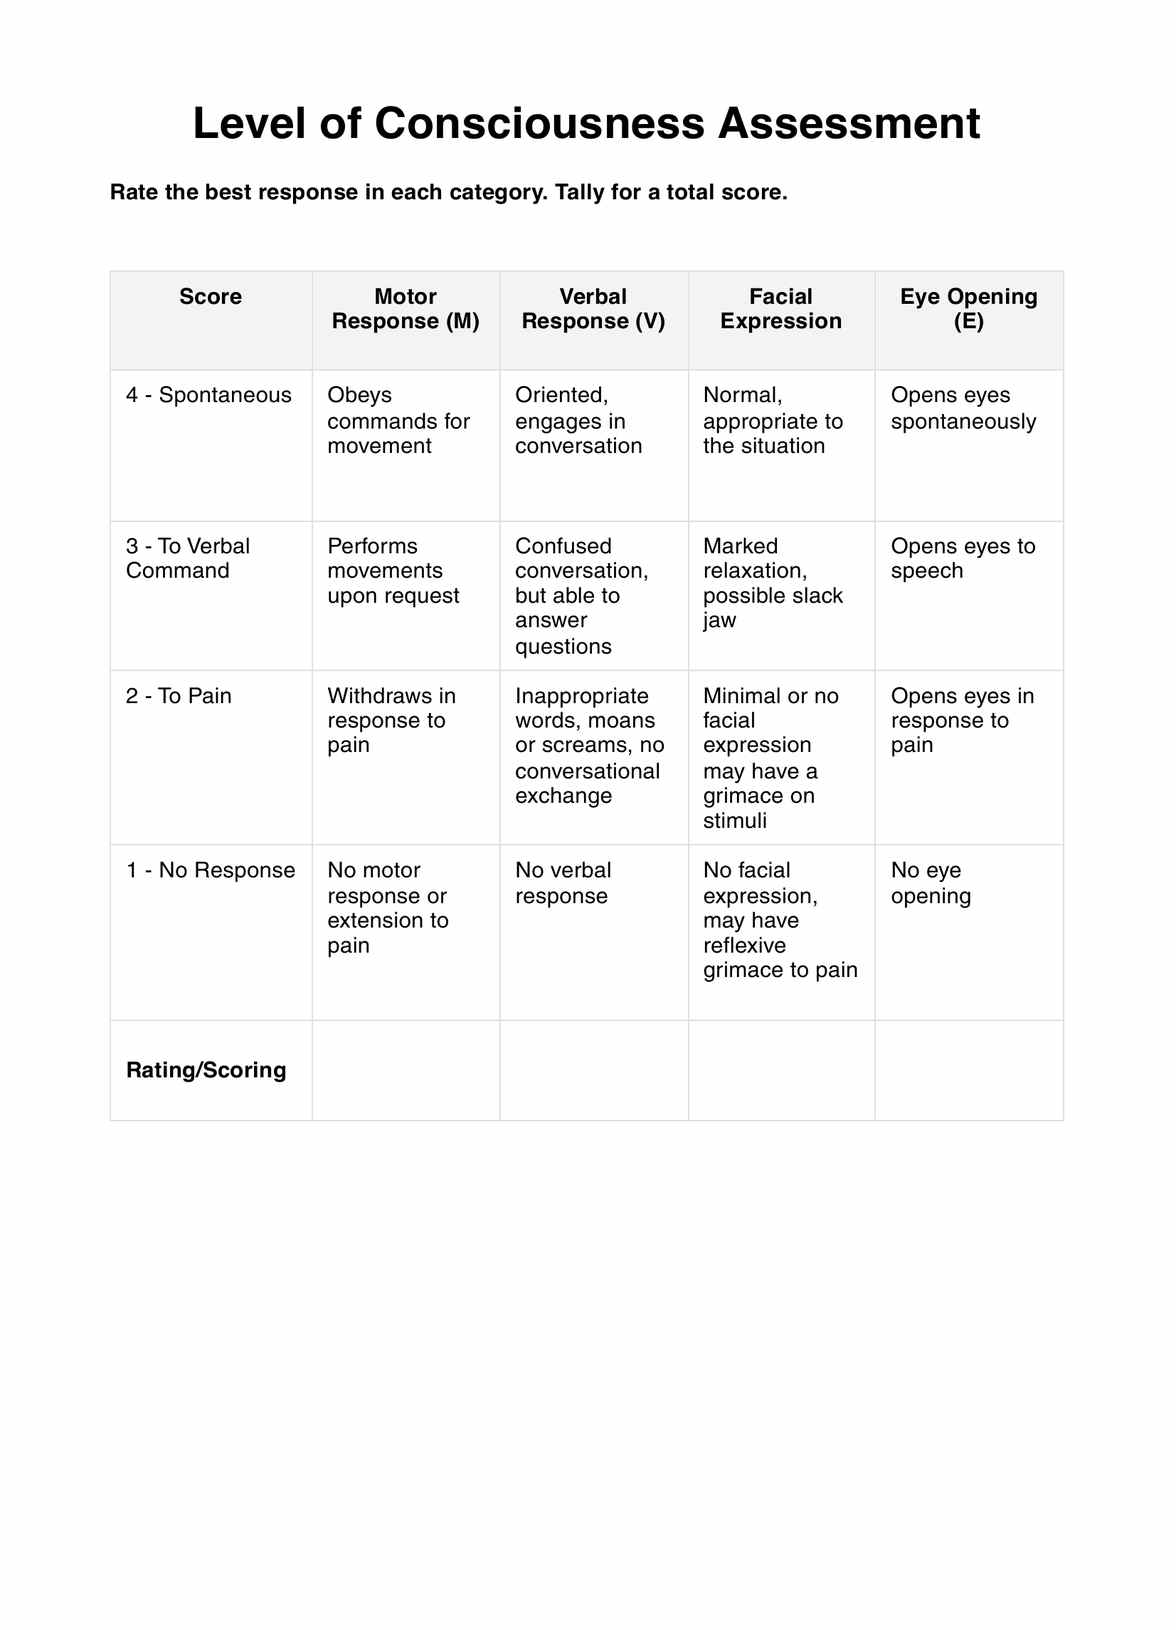 Level of Consciousness Assessment PDF Example